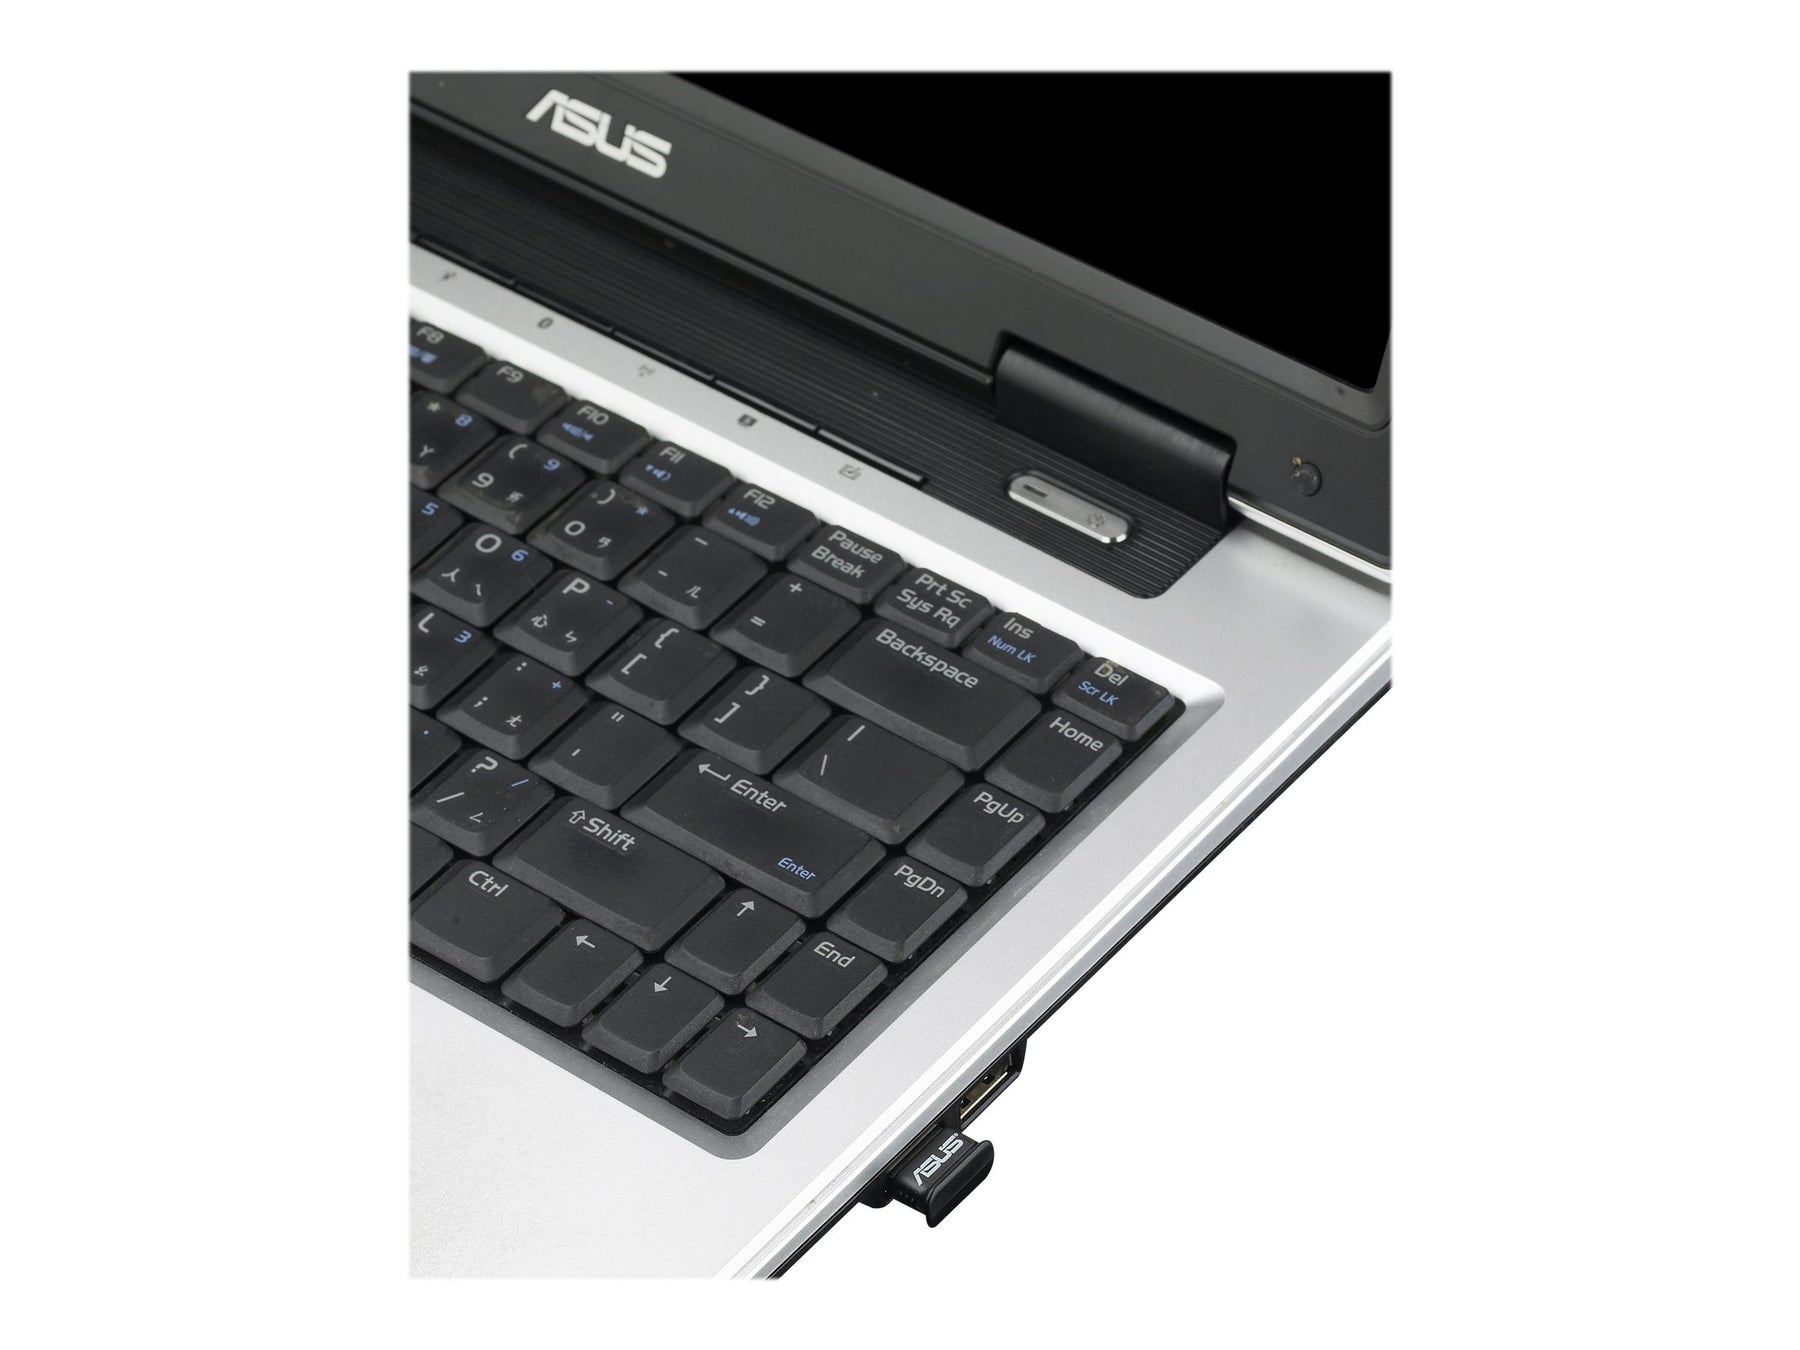 ASUS USB-BT400 - Netzwerkadapter - USB 2.0